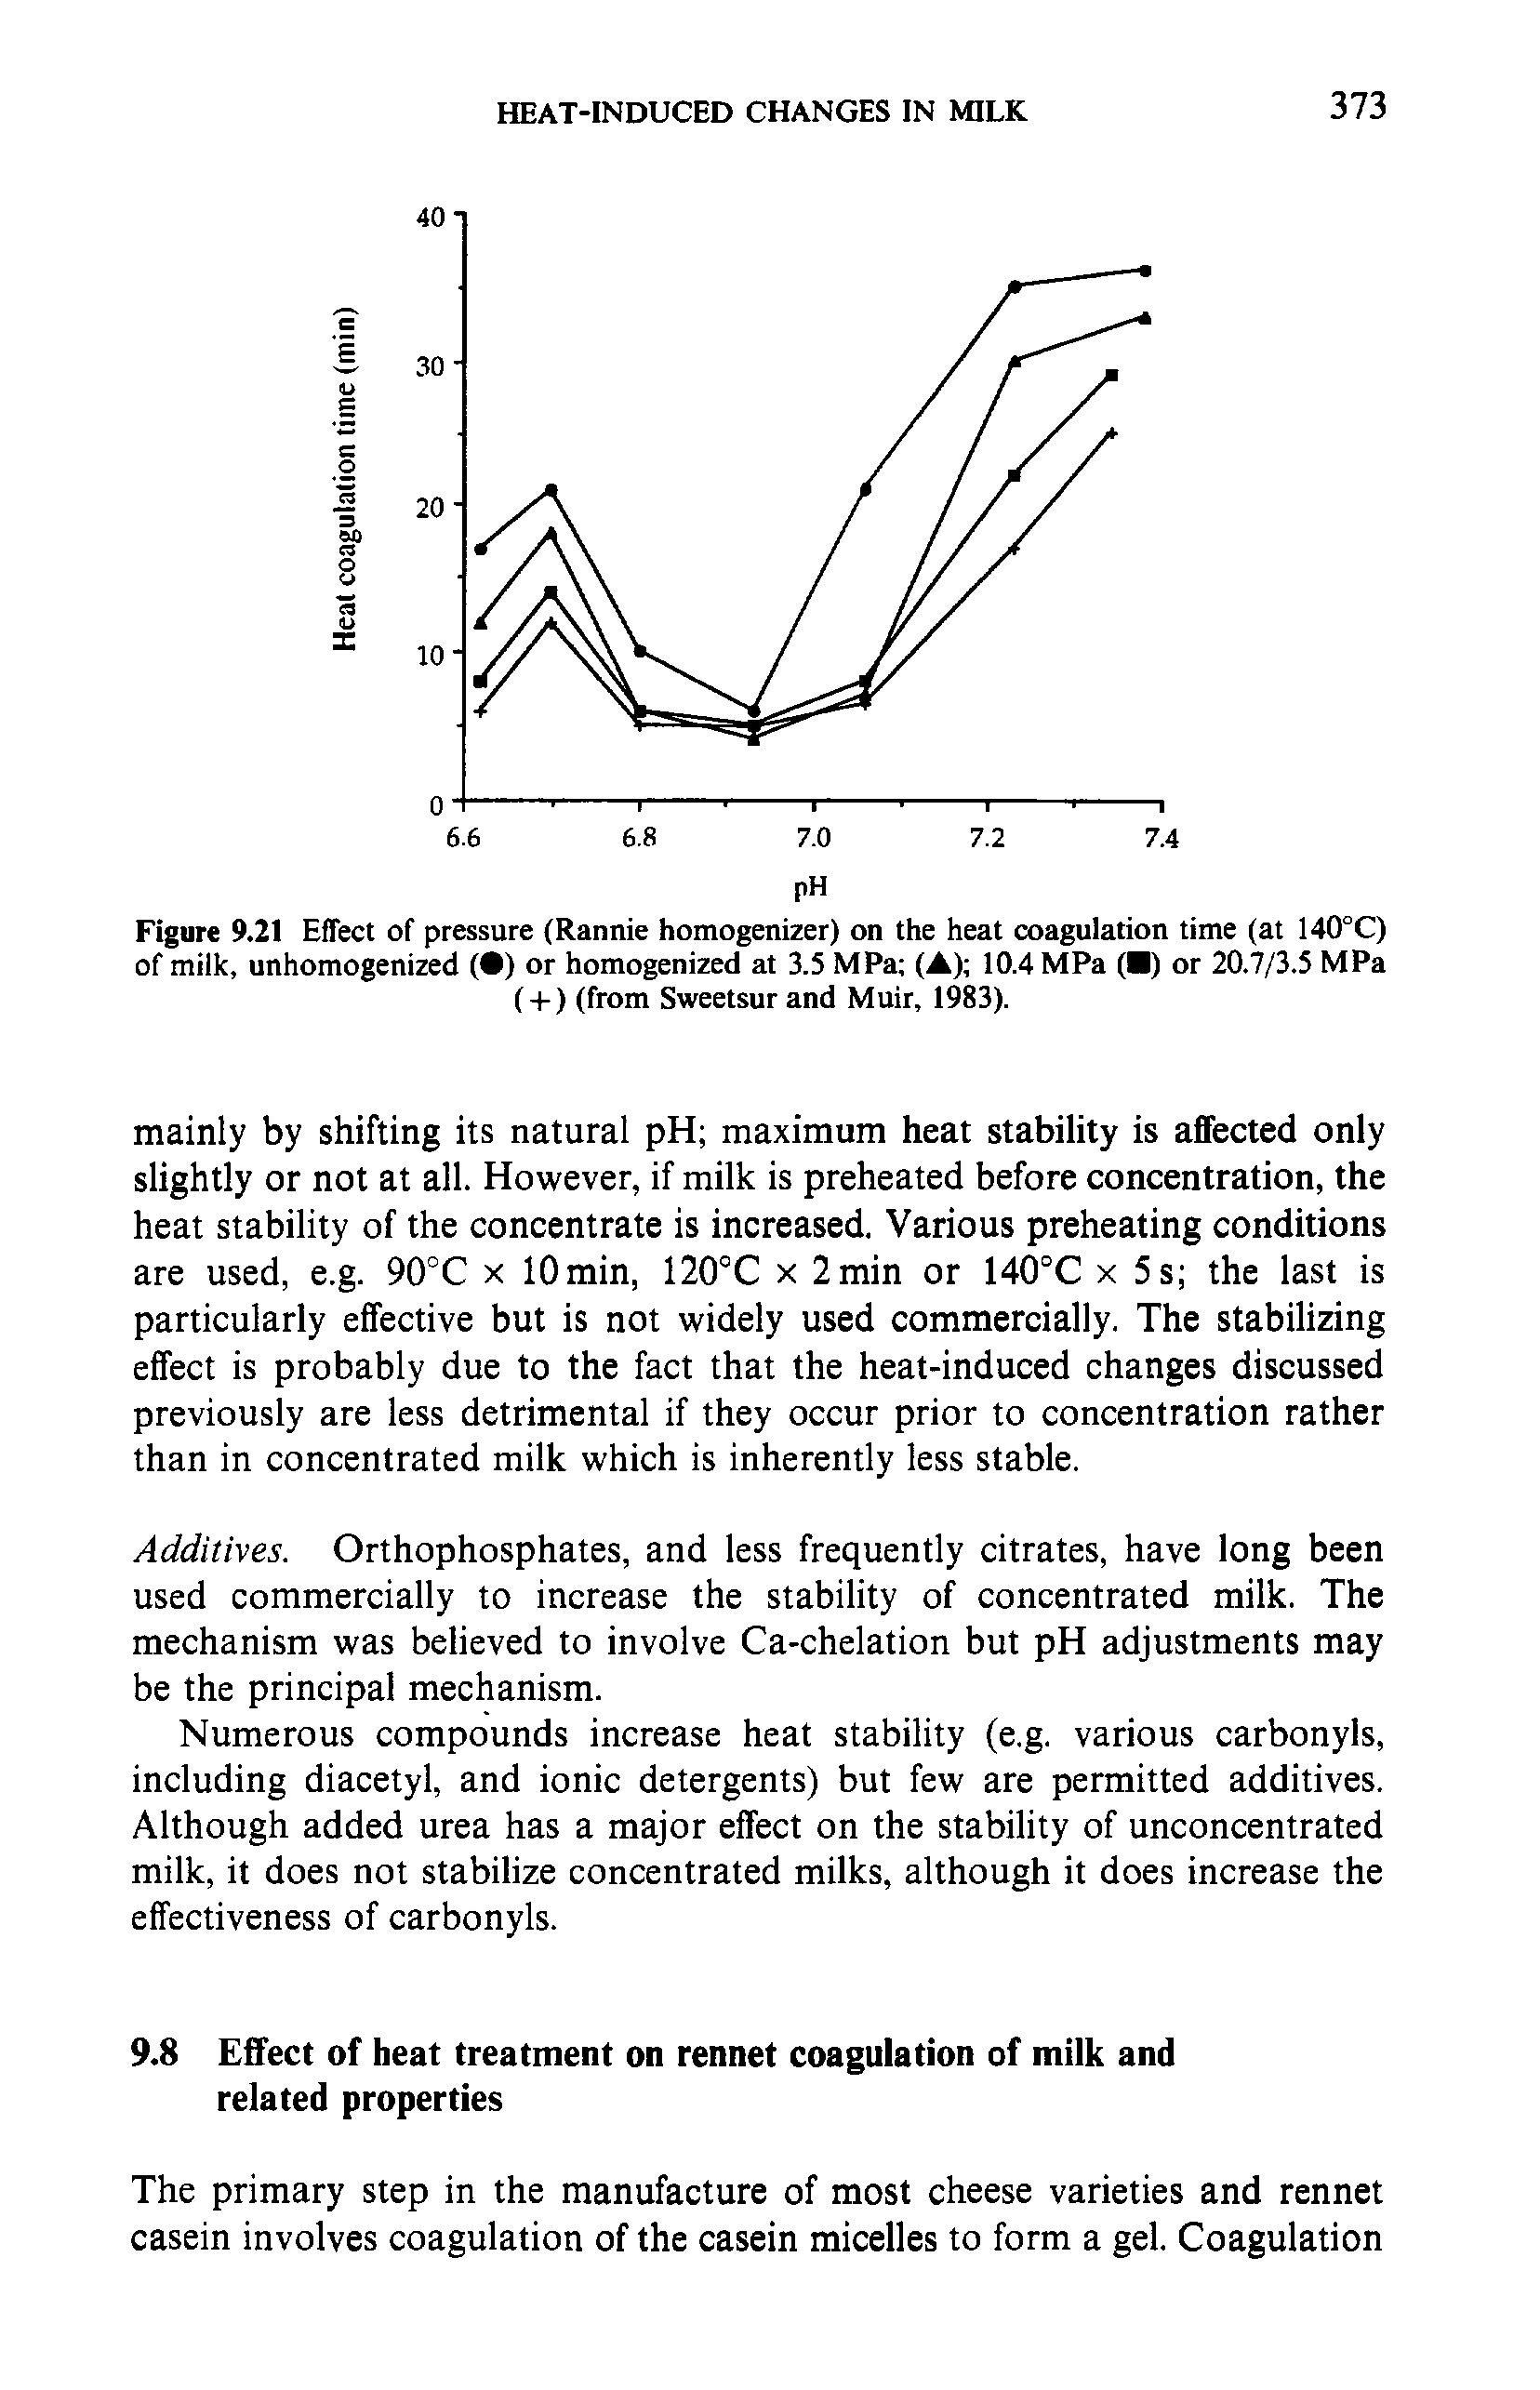 Figure 9.21 Effect of pressure (Rannie homogenizer) on the heat coagulation time (at 140°C) of milk, unhomogenized ( ) or homogenized at 3.5 MPa (A) 10.4 MPa ( ) or 20.7/3.5 MPa ( + ) (from Sweetsur and Muir, 1983).